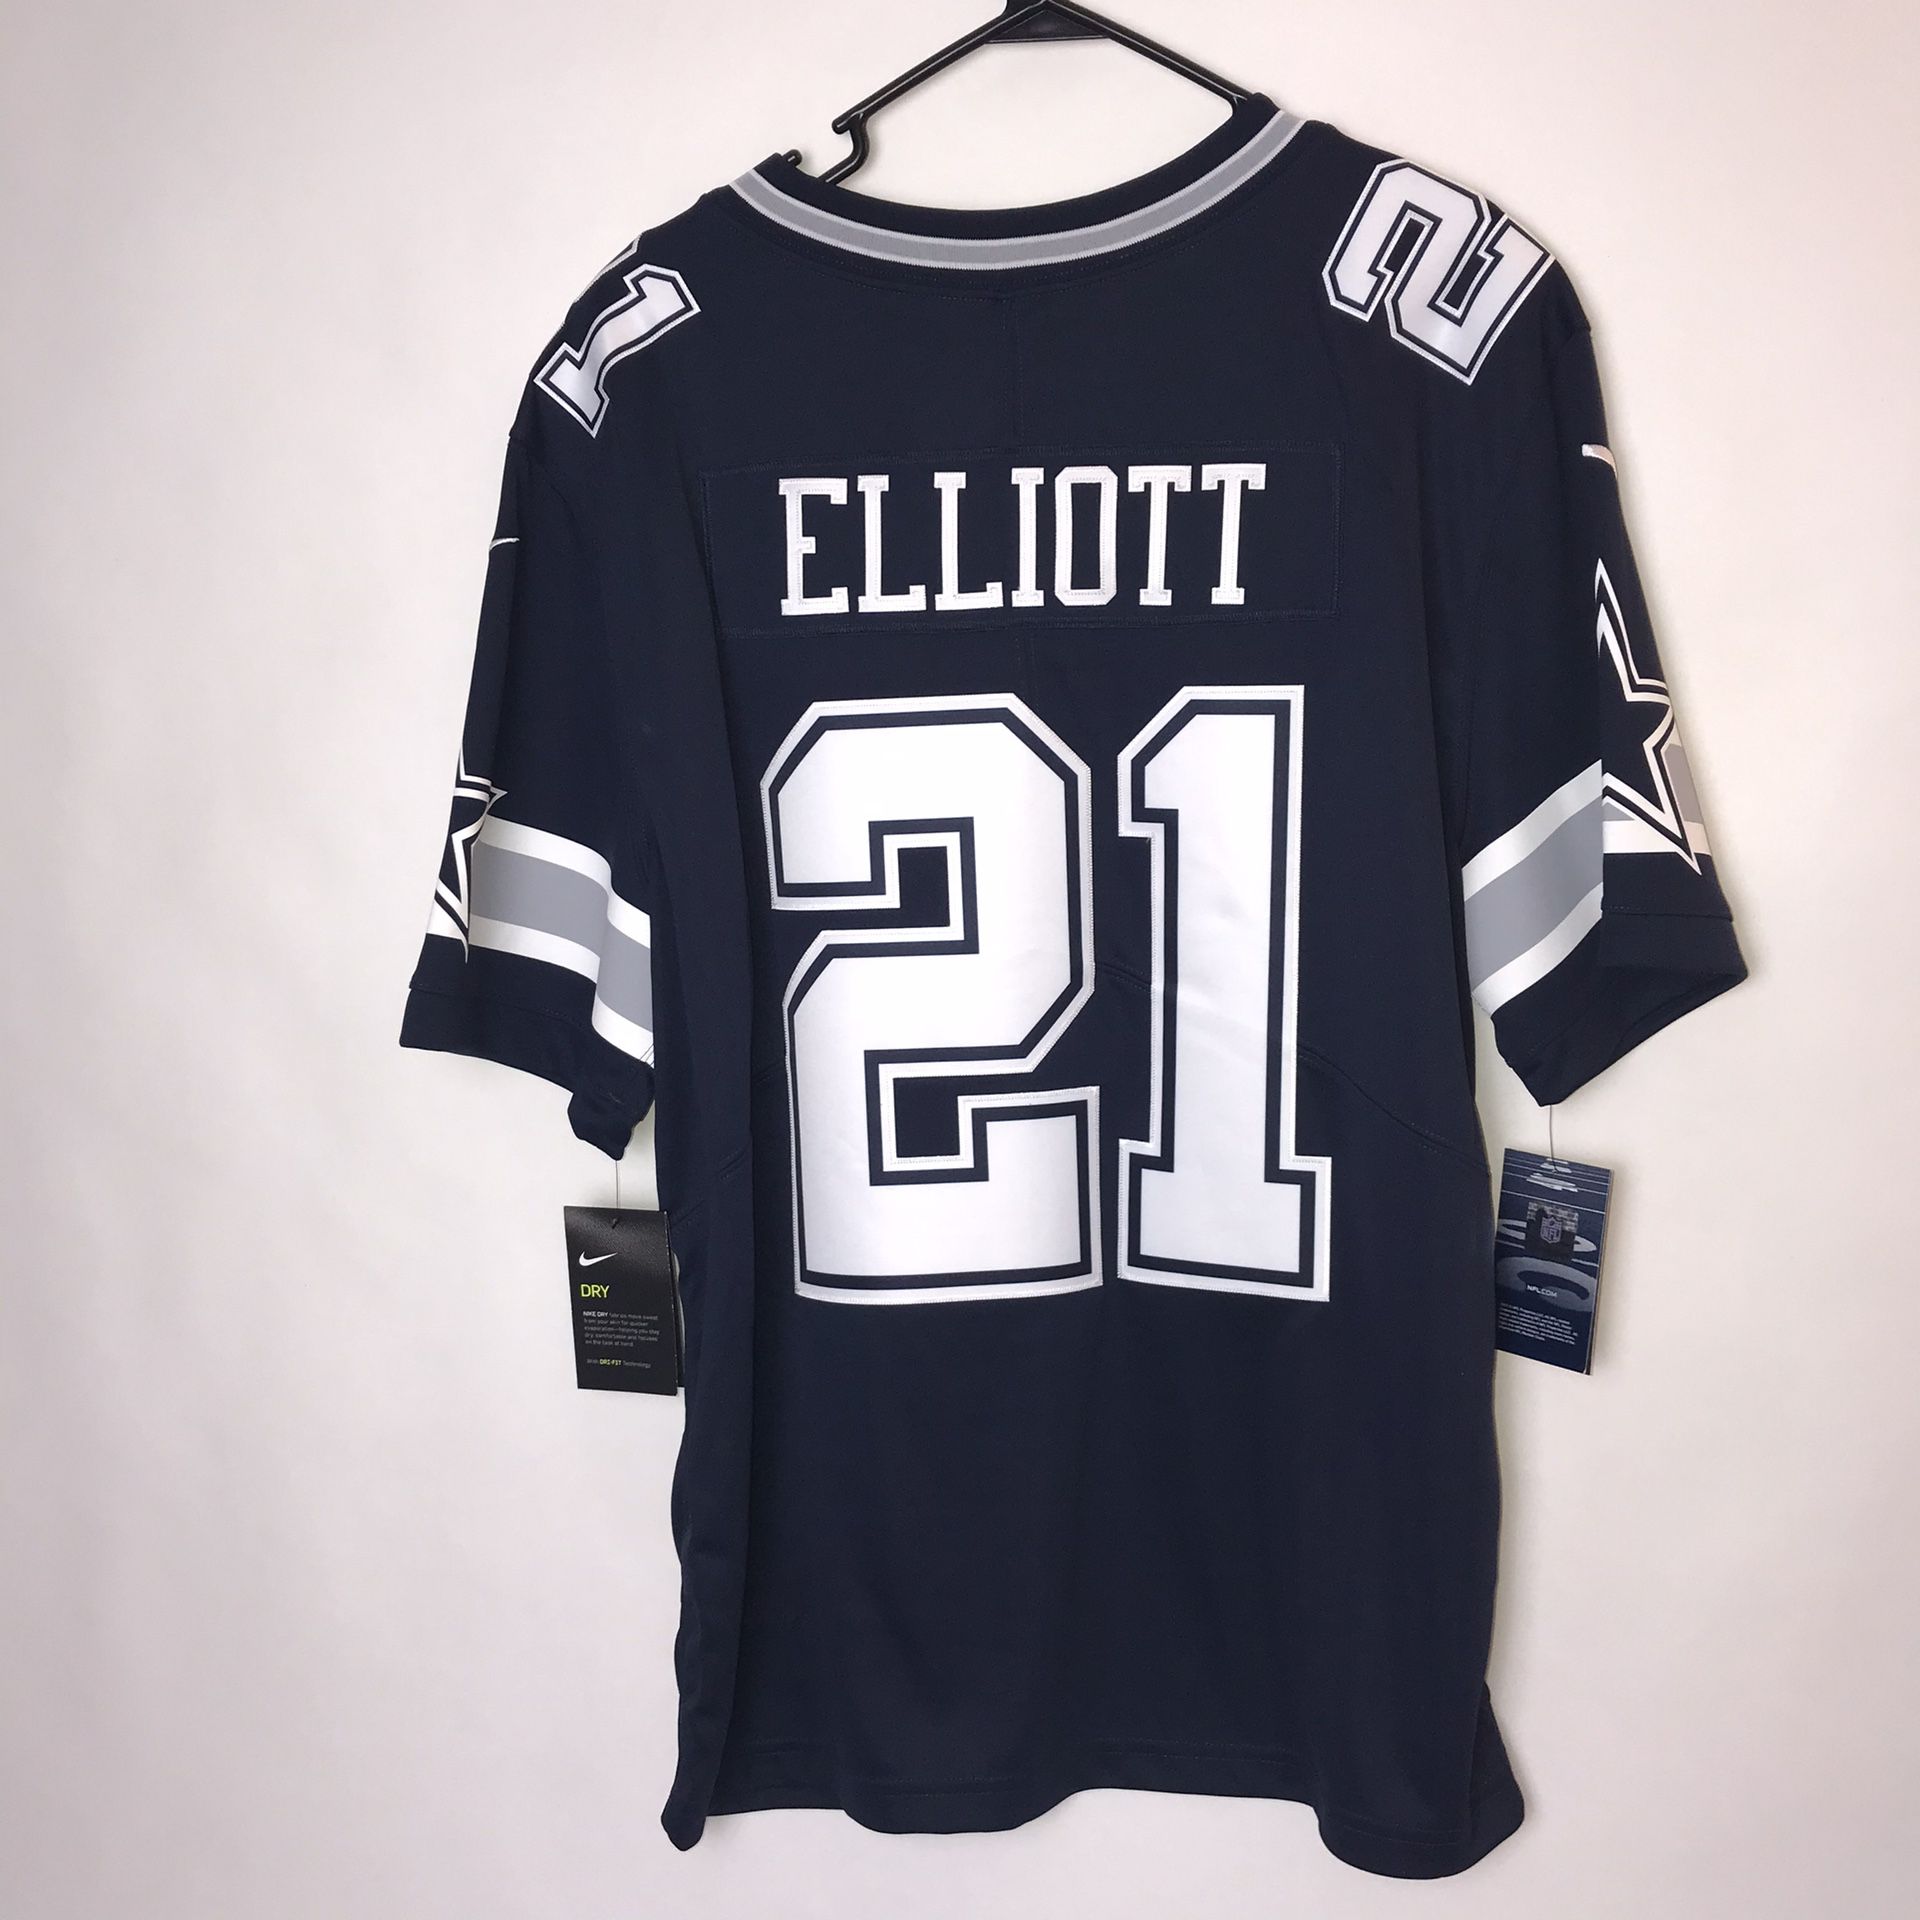 Ezekiel Elliott Cowboys On Field Jersey XL Brand New w tags $150 retail